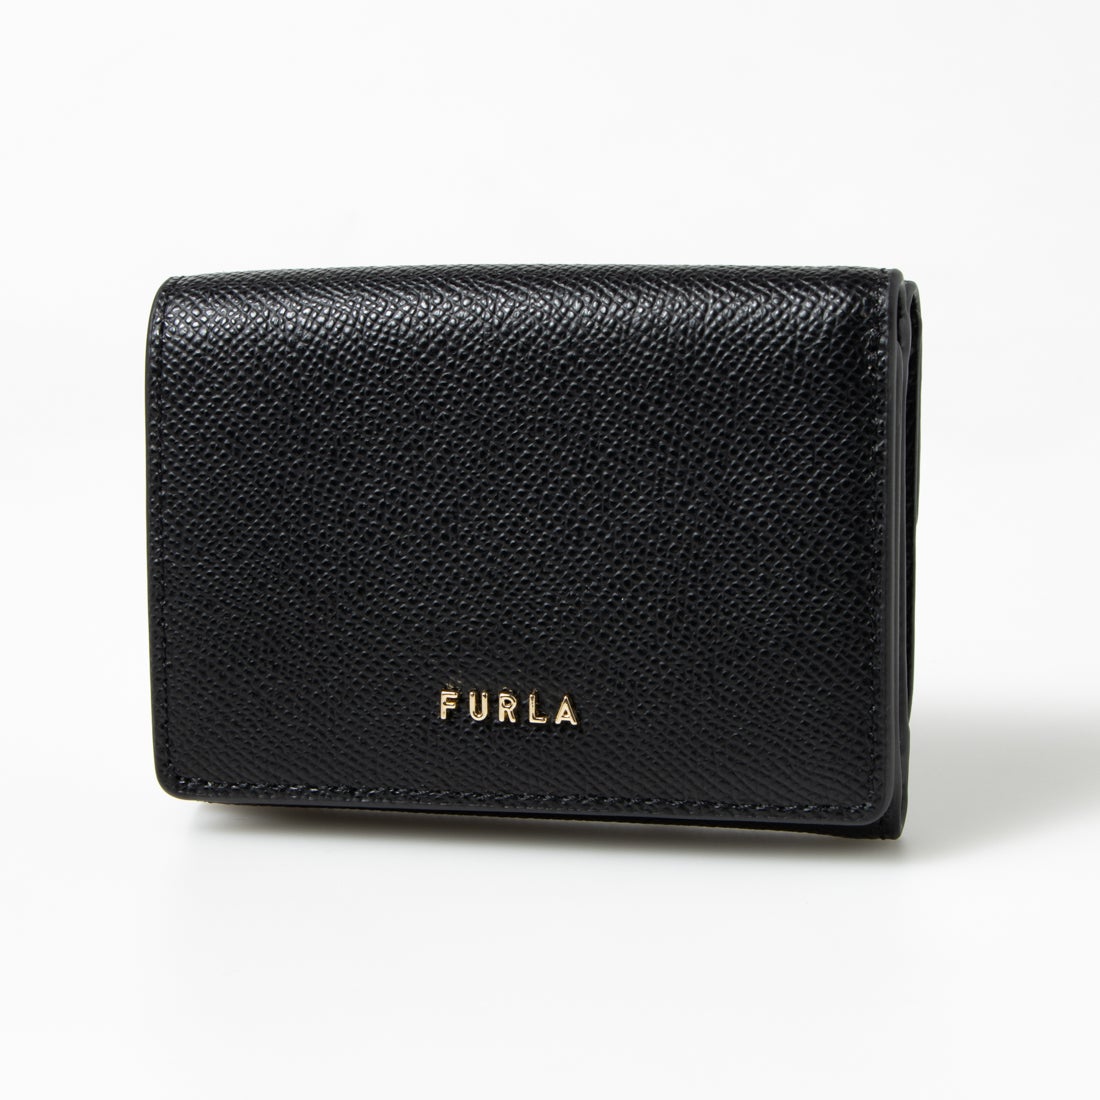 FURLAの財布 - 折り財布